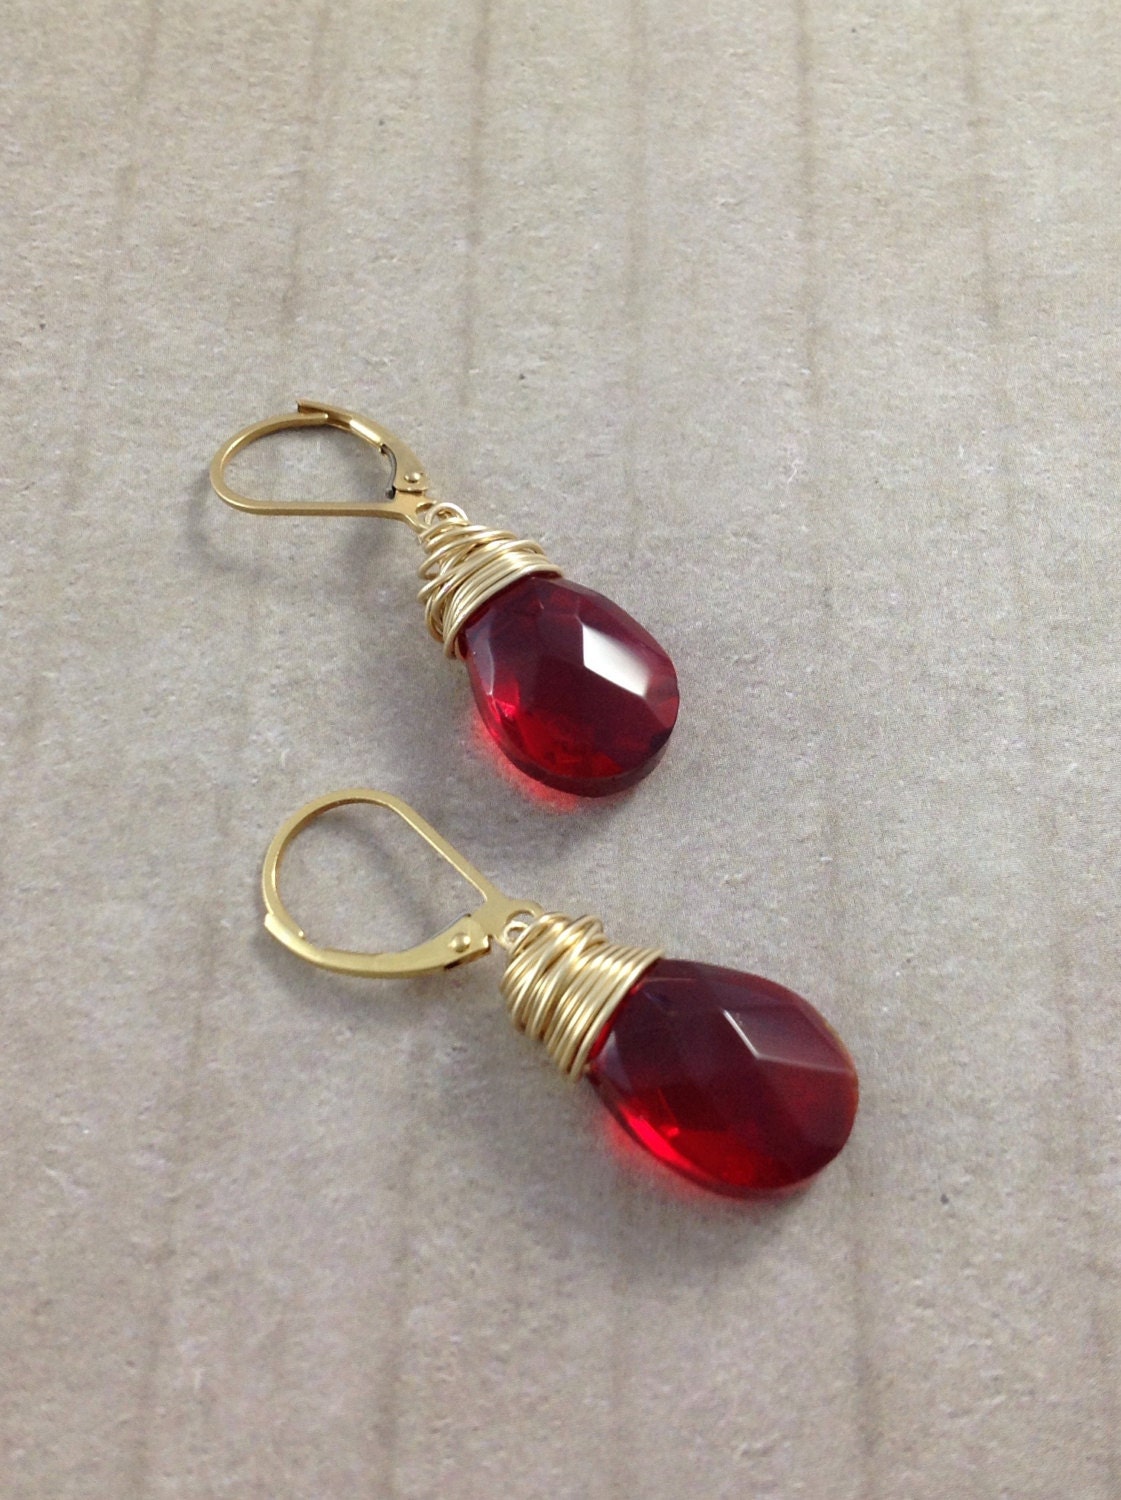 Ruby red teardrop earrings. 14 KT gold filled wire wrapped, gold filled leverback. Pretty handmade crimson faceted glass briolette earrings. - GemsByKelley